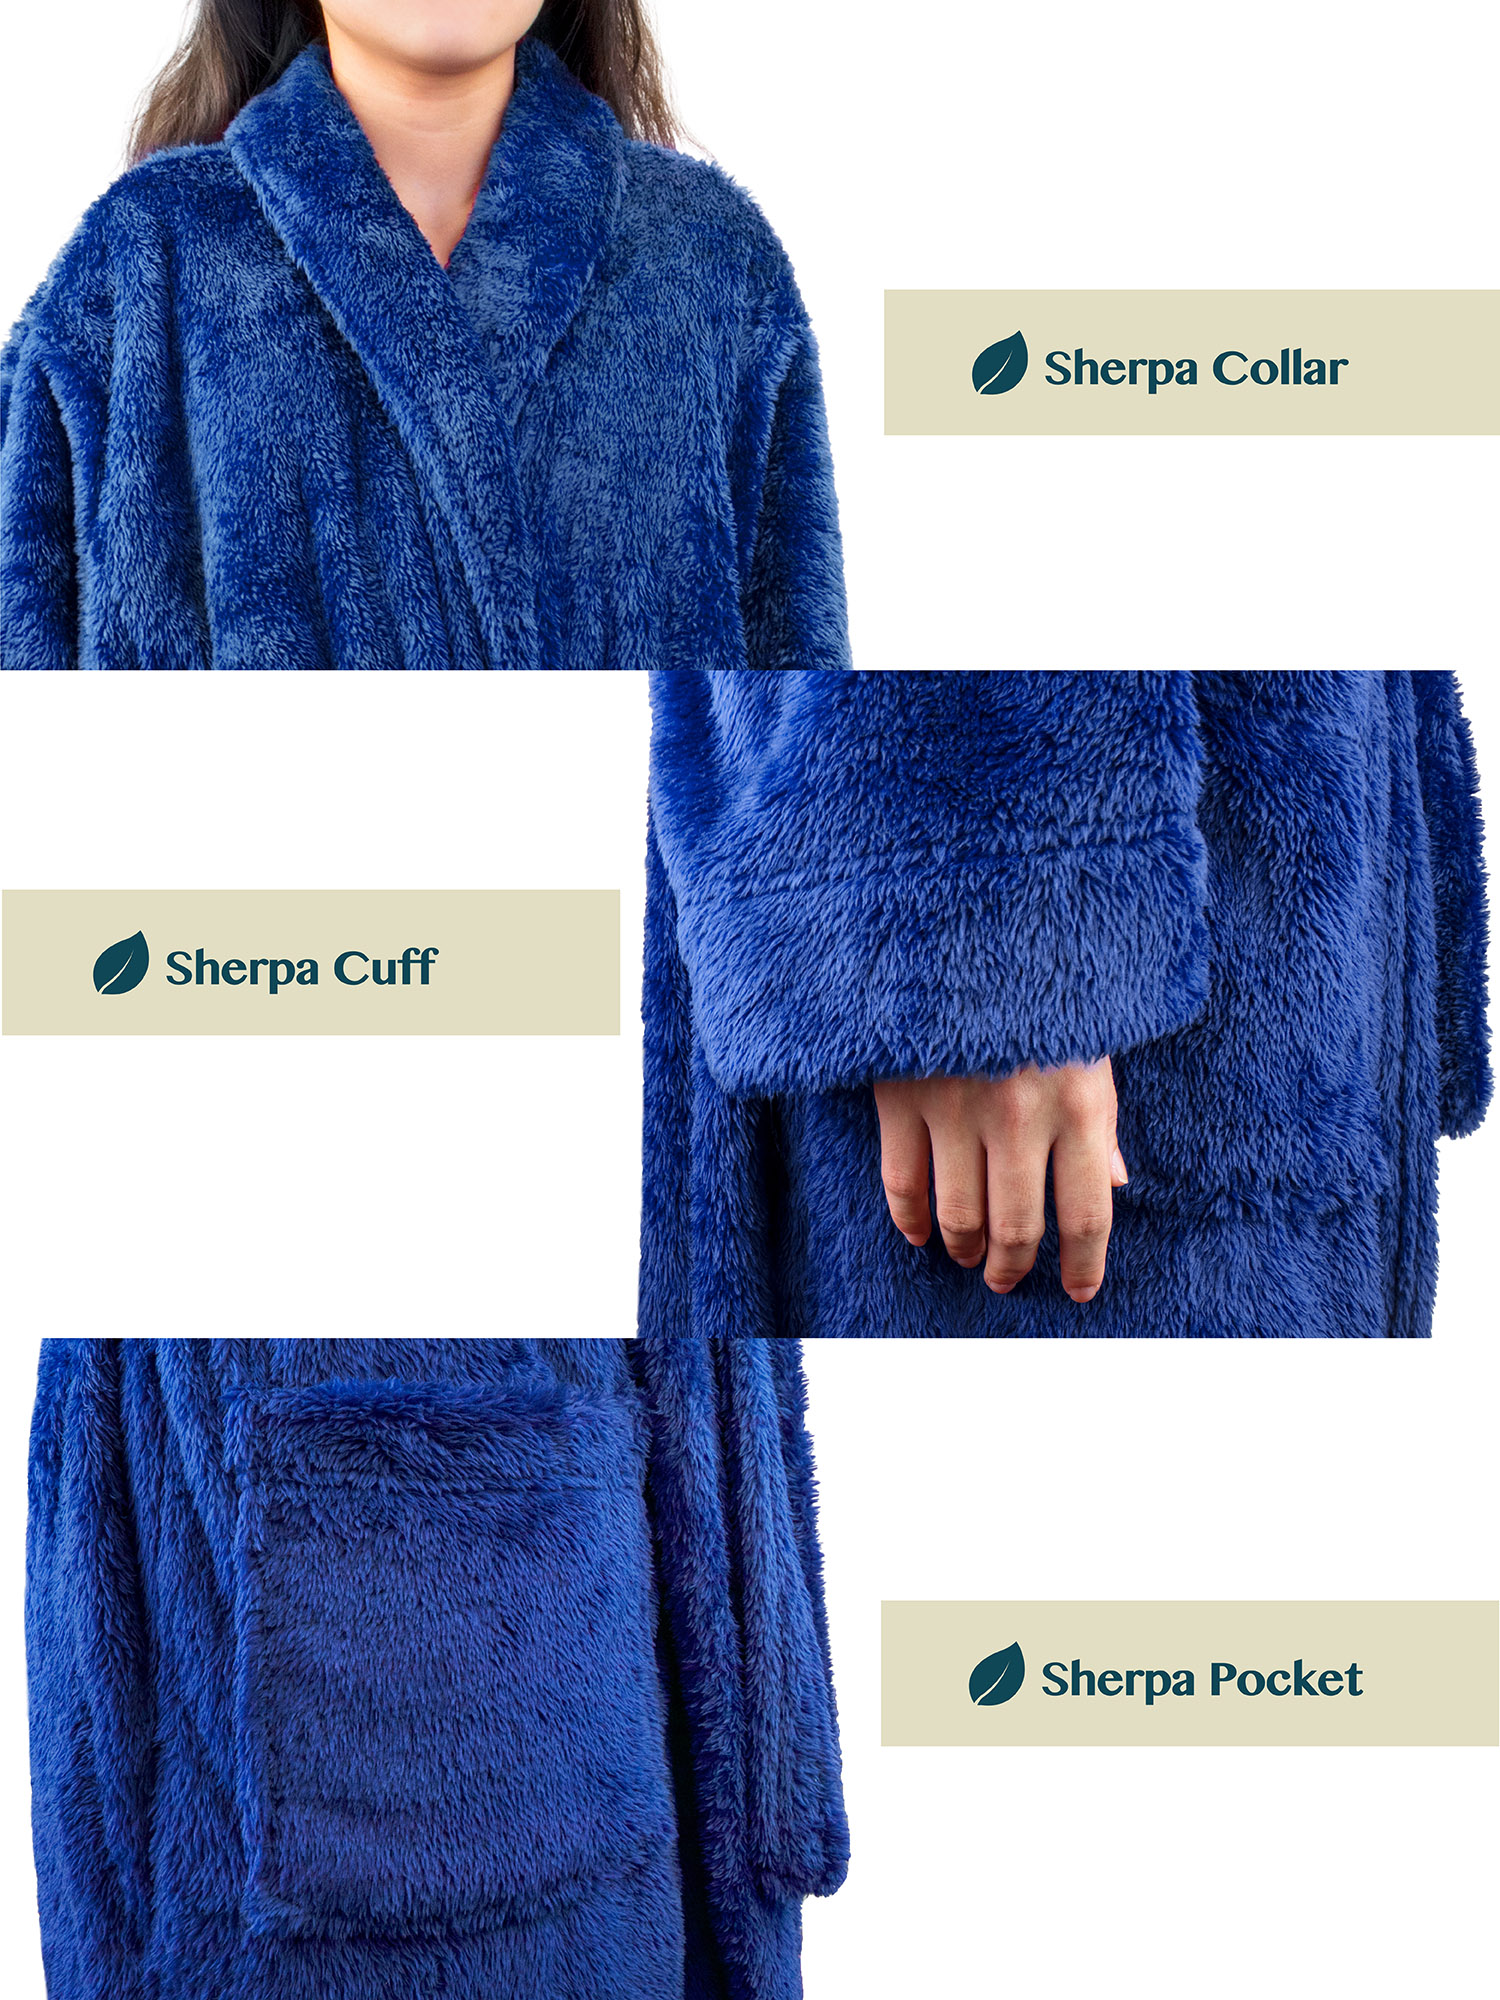 PAVILIA Premium Womens Plush Soft Robe Fluffy, Warm, Fleece Sherpa Shaggy  Bathrobe (2XL/3XL, Black) at  Women's Clothing store